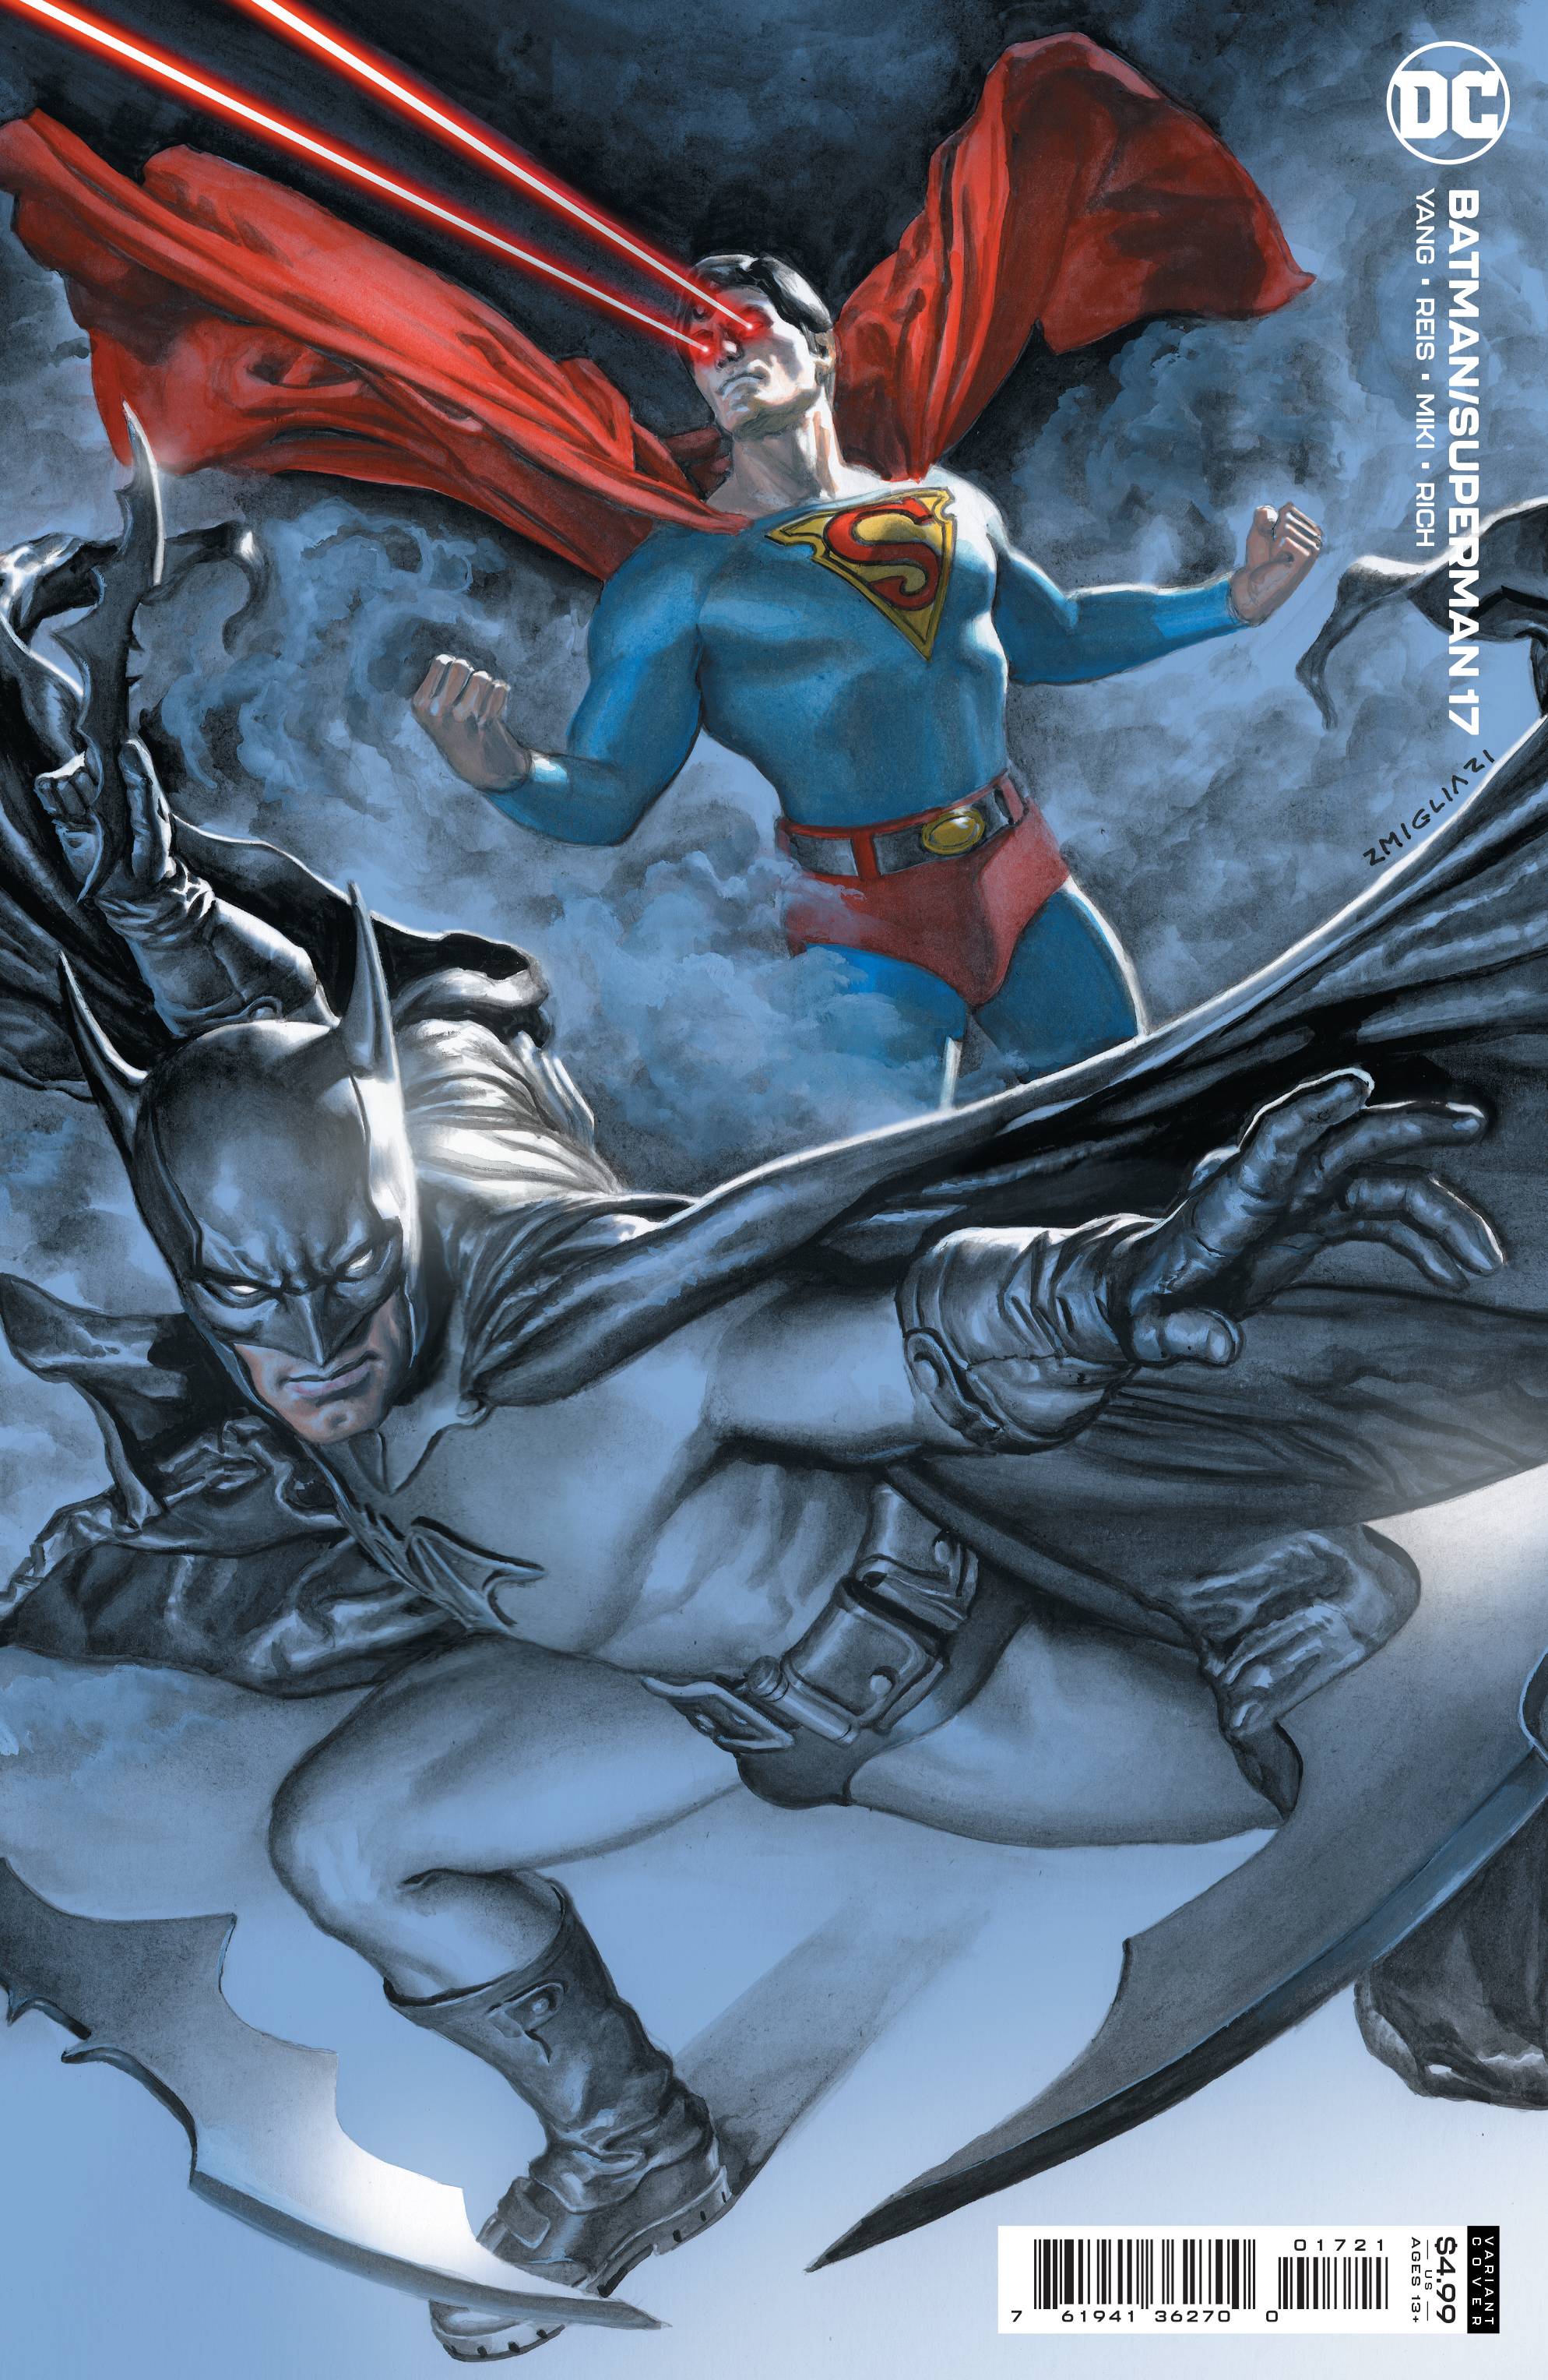 BATMAN SUPERMAN #17 CVR B MIGLIARI CARDSTOCK VAR